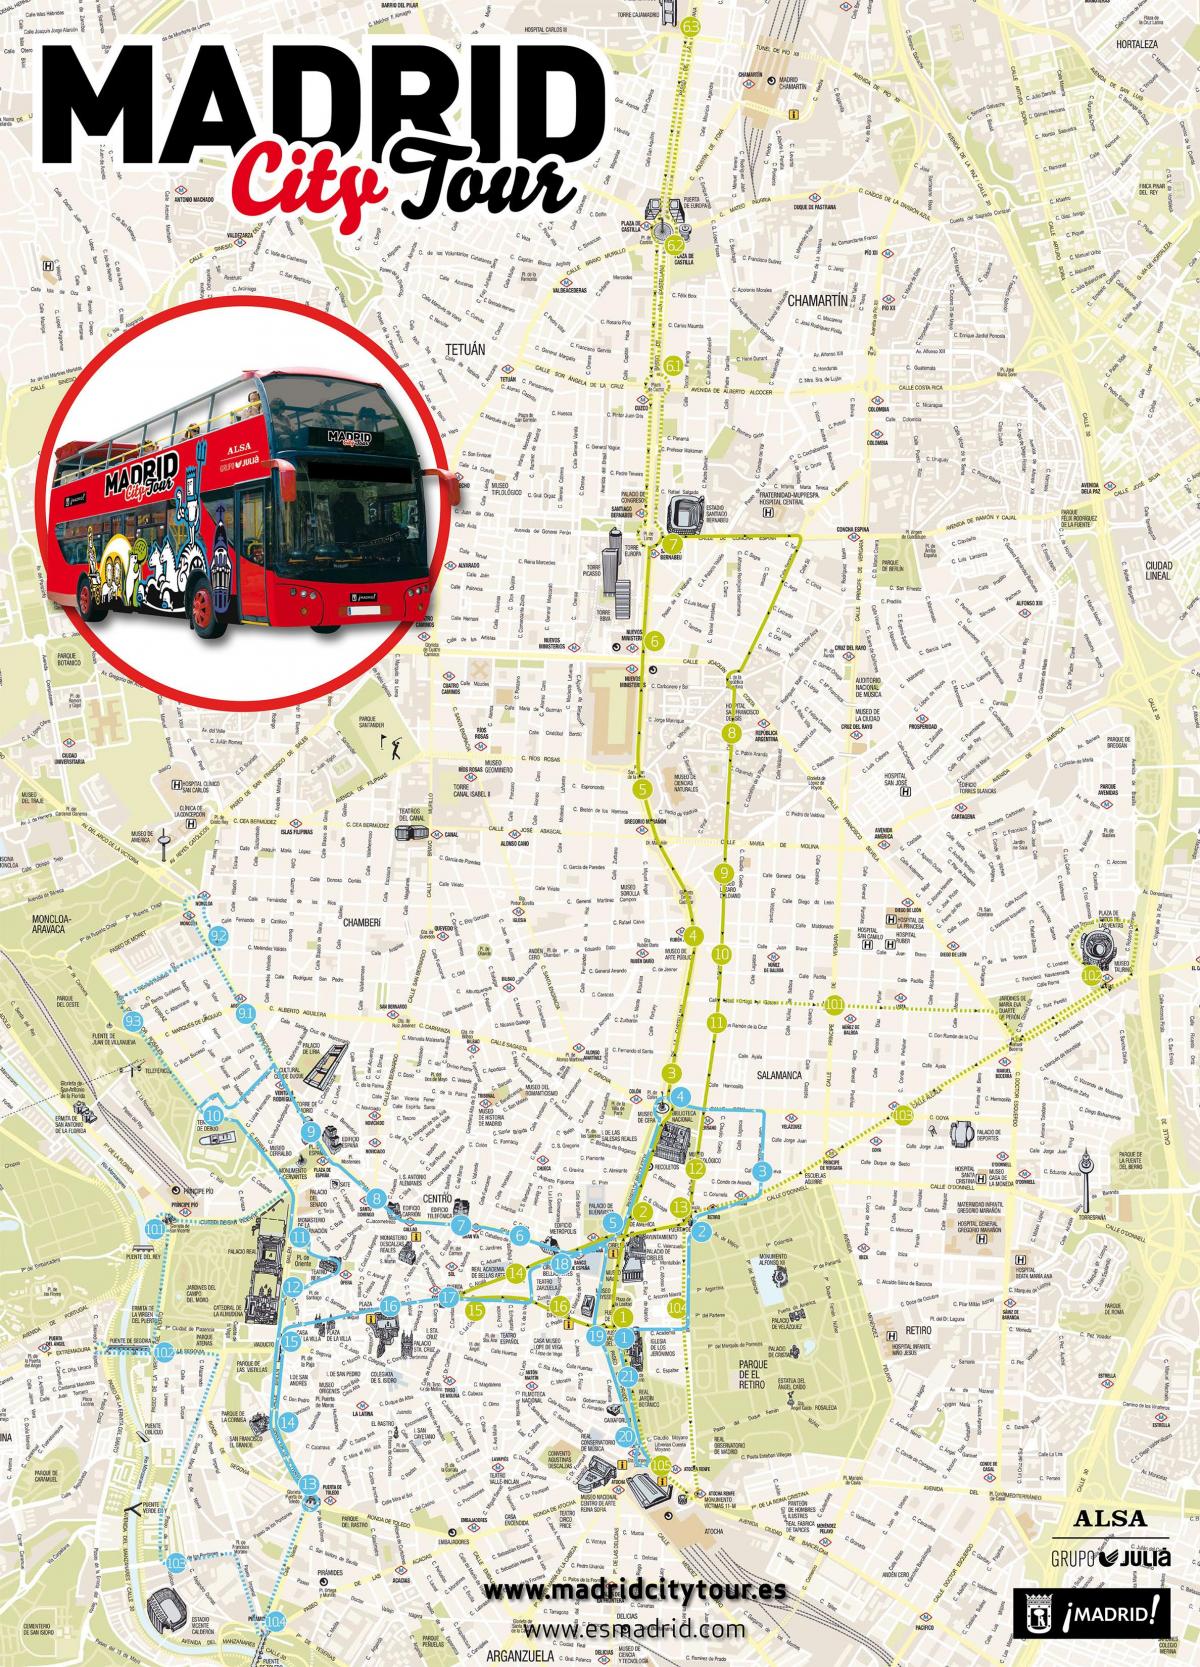 Madrid city bus tour kartta